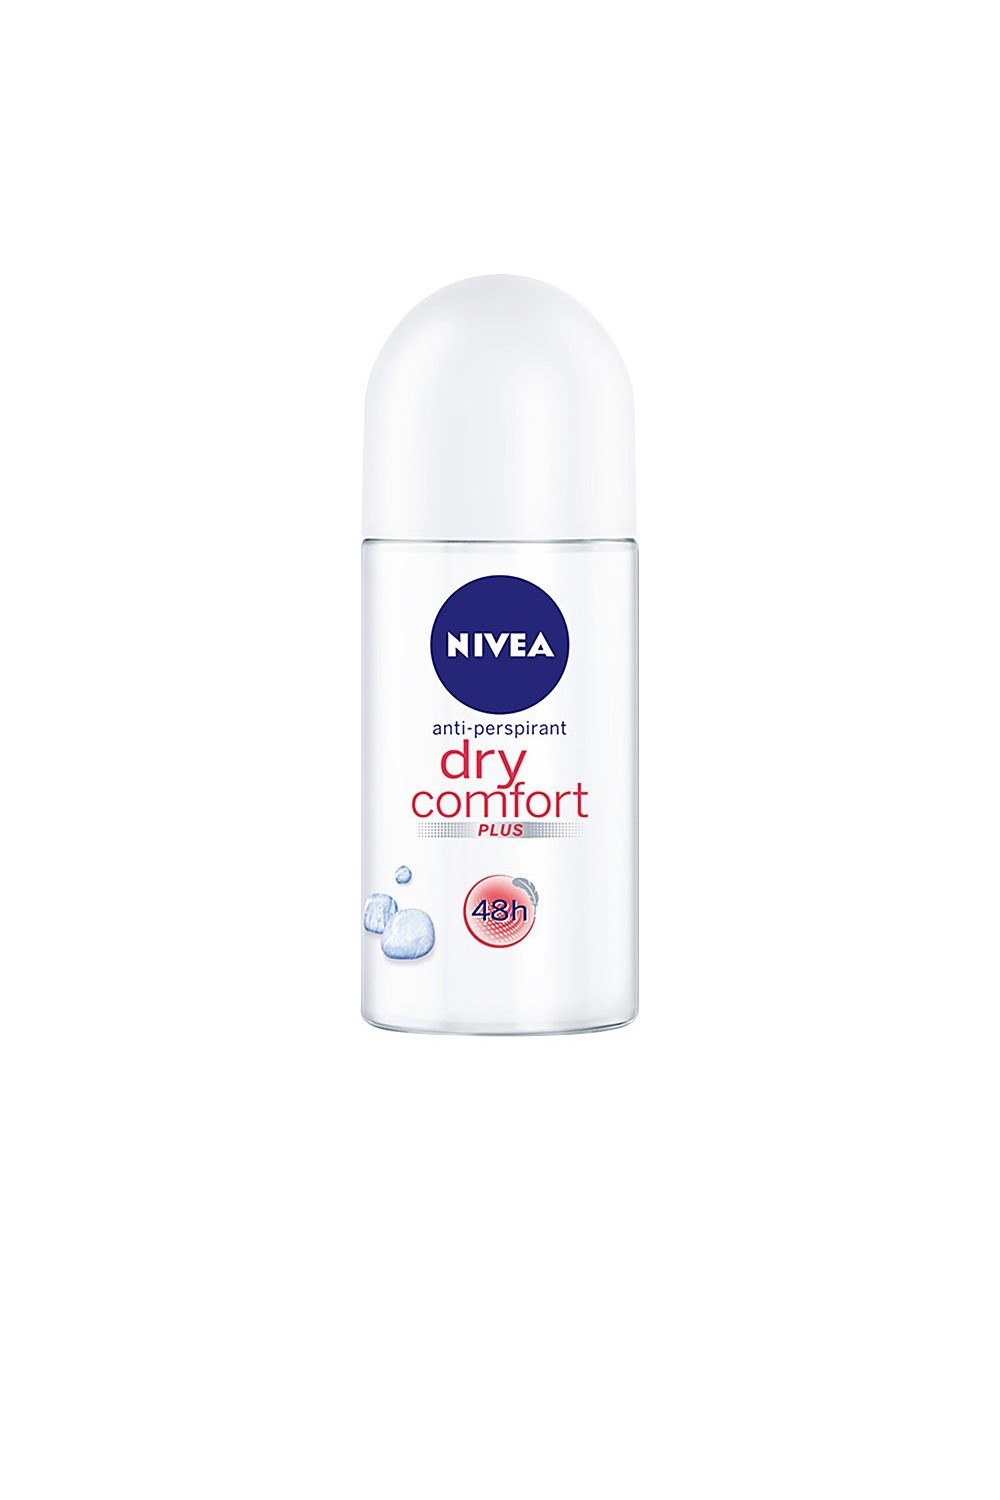 Nivea Dry Comfort Anti-transpirant Roll-on 50ml